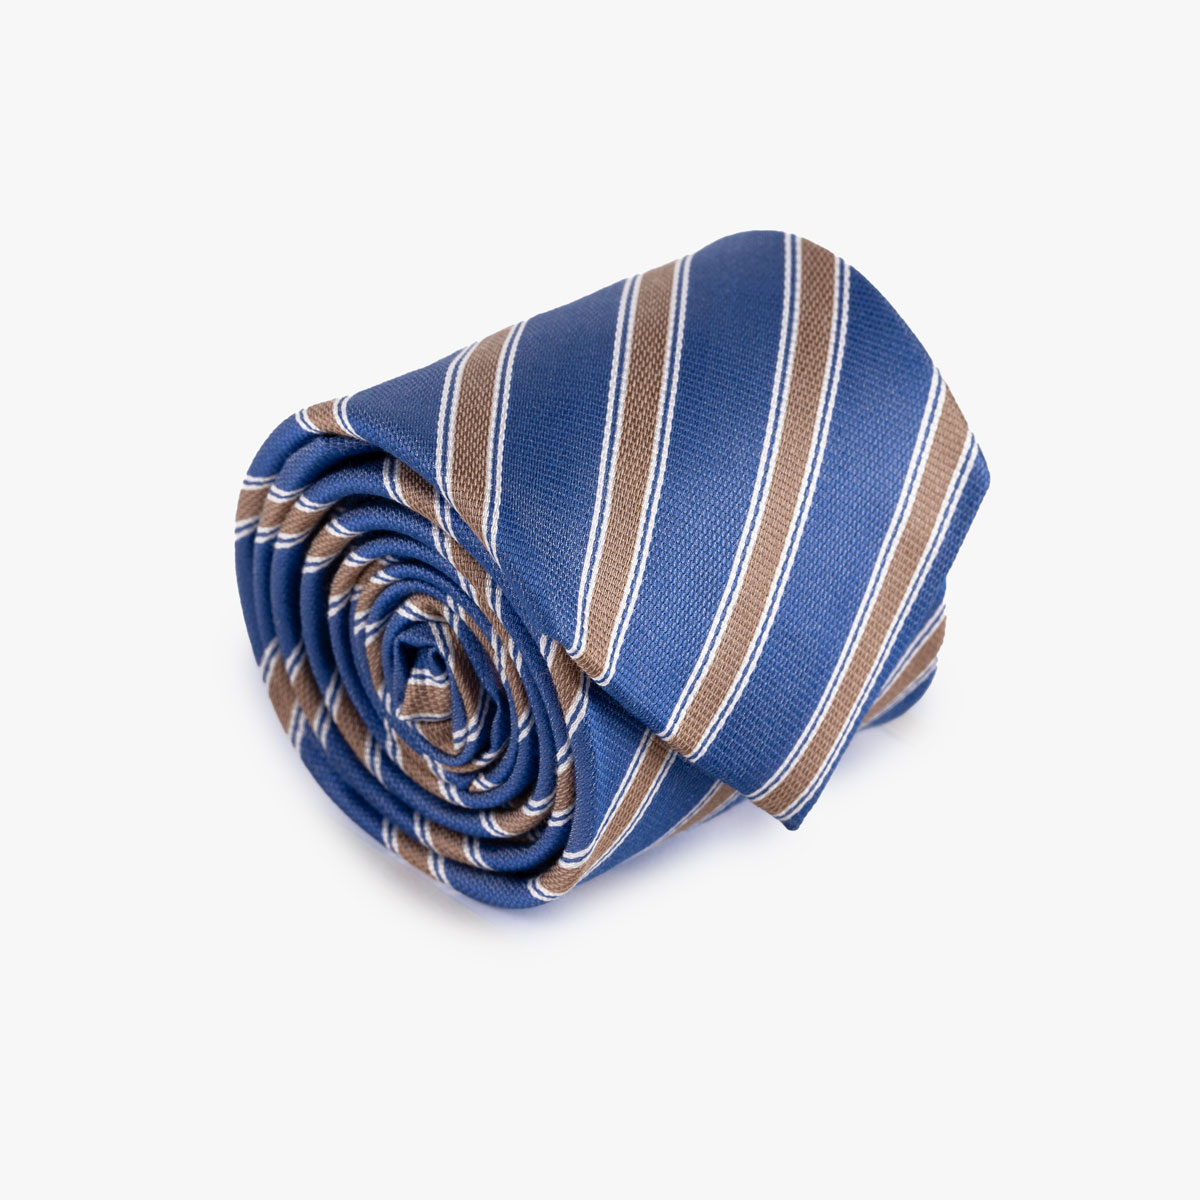 Krawatte aus Seide/Baumwolle in blau gestreift